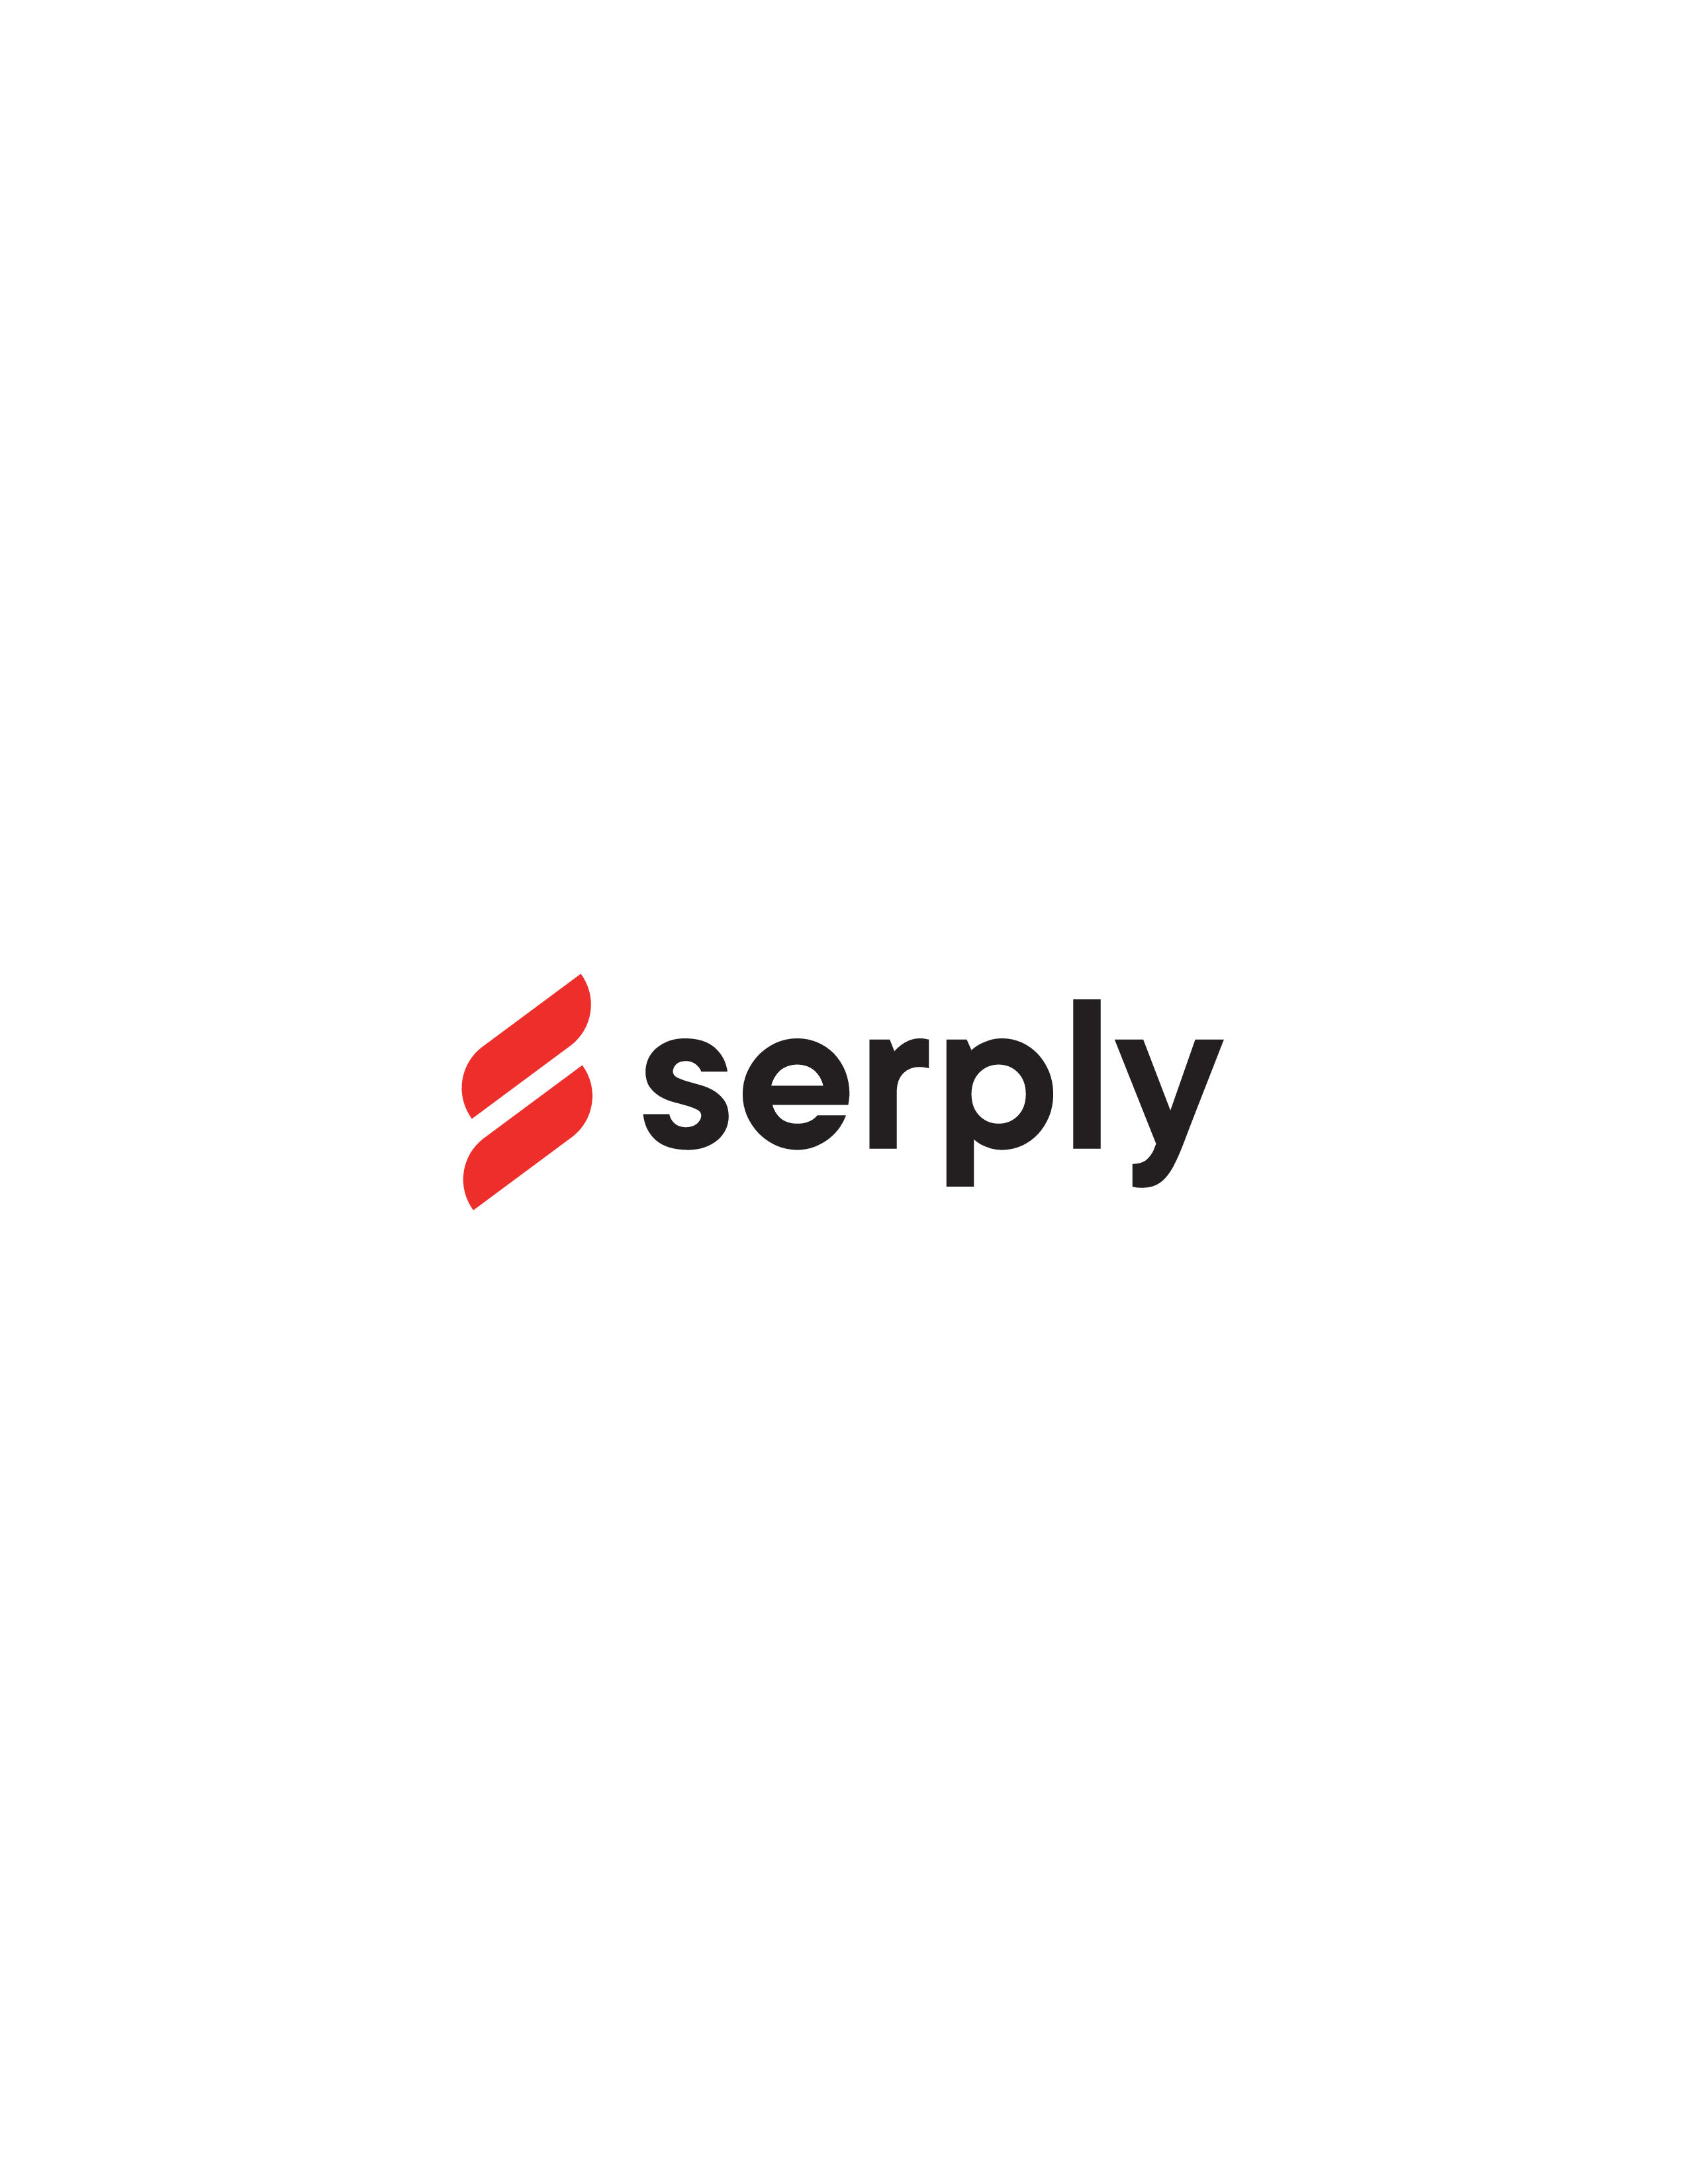 Serply.io